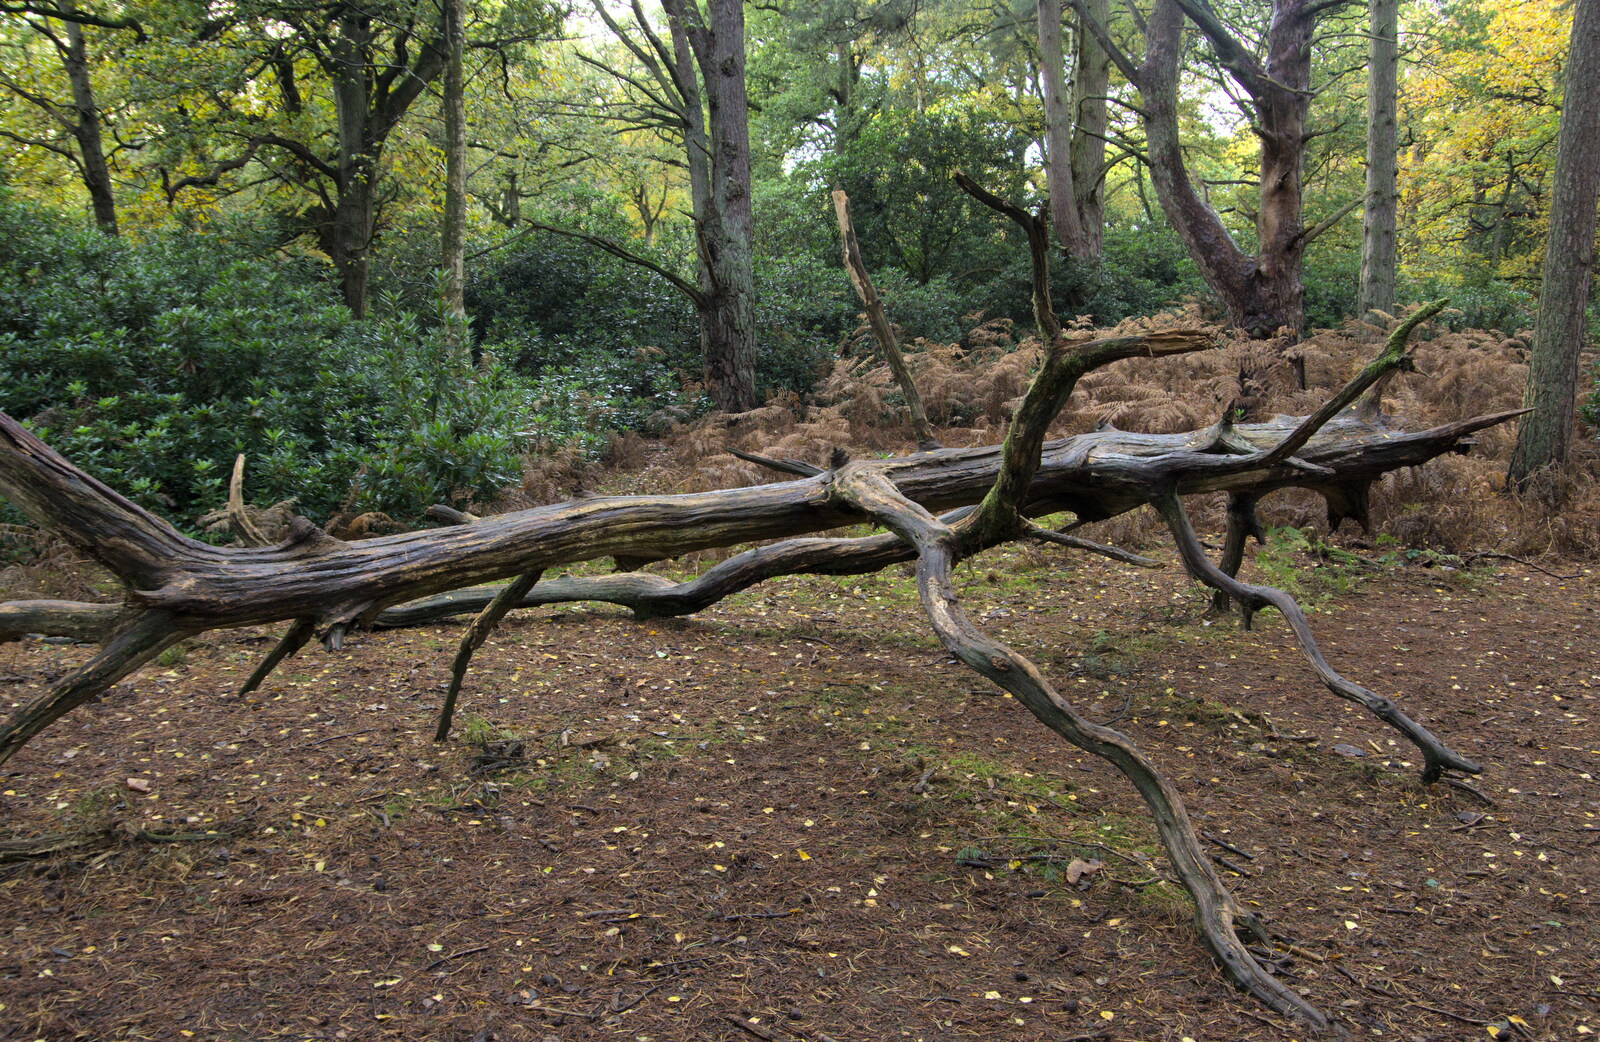 A fallen tree from A Trip to Sandringham Estate, Norfolk - 31st October 2020